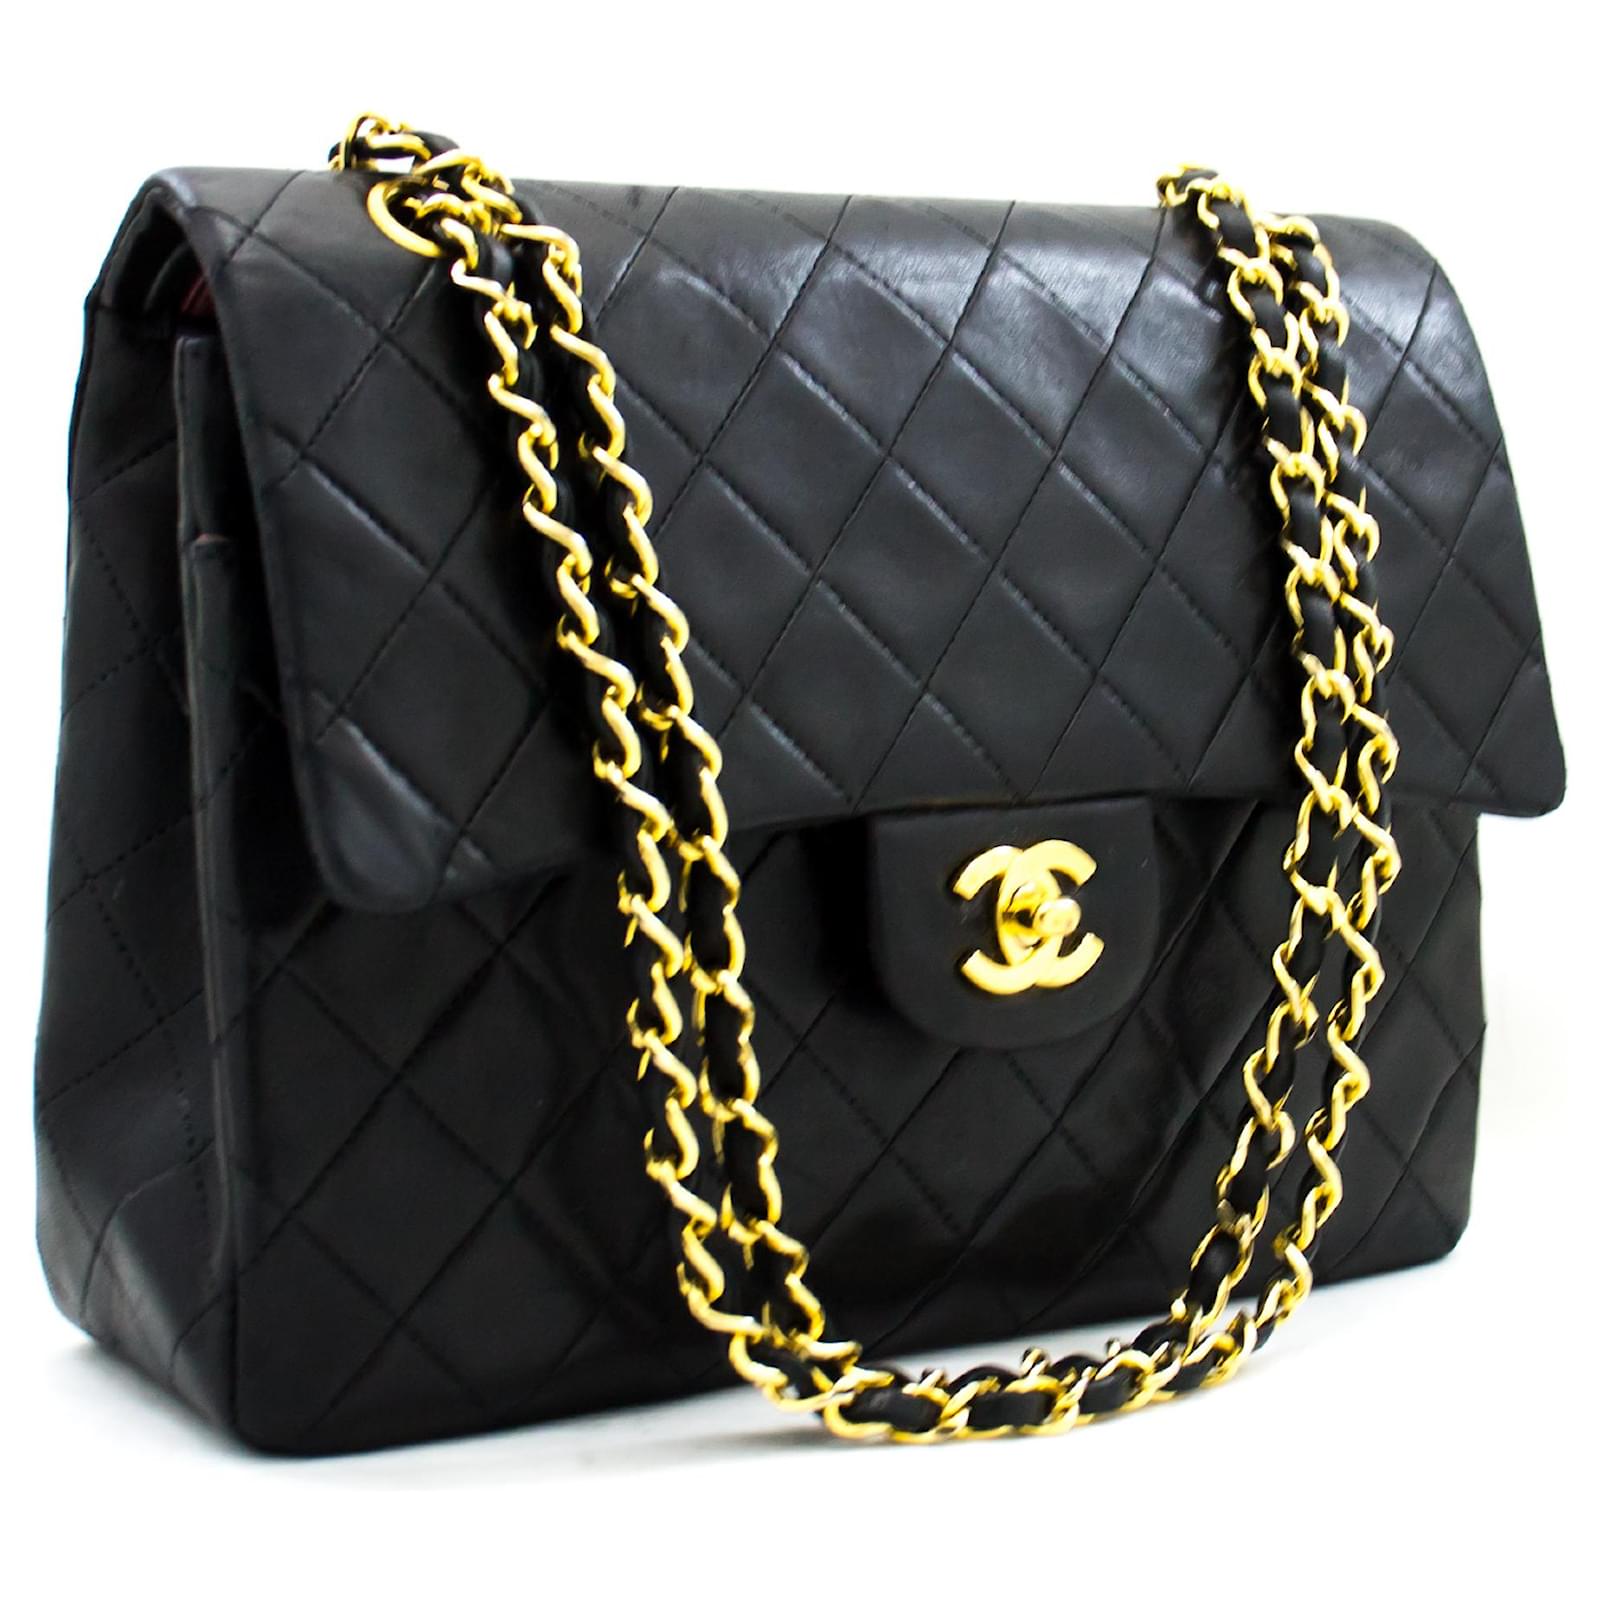 Vintage Chanel classic 2.55 black lambskin shoulder bag with